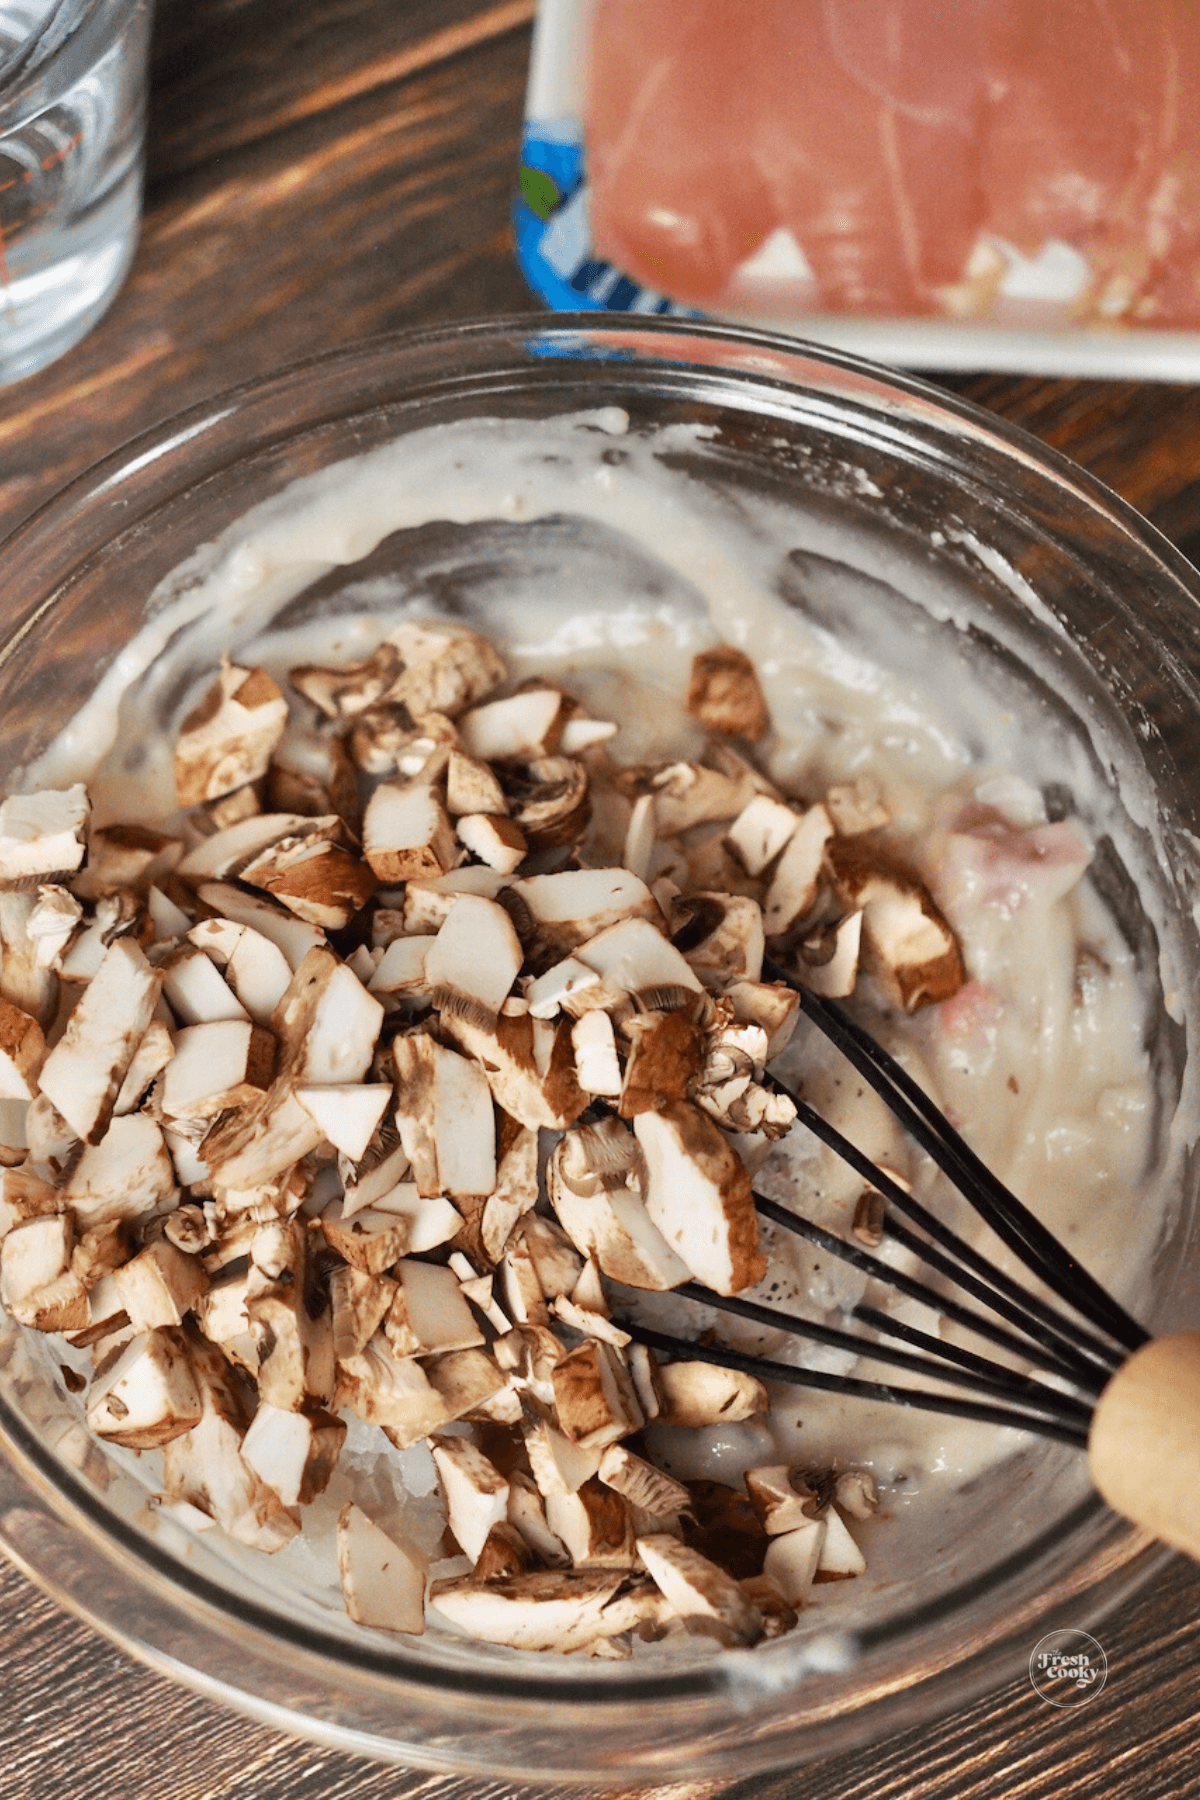 Adding fresh mushrooms to gravy mixture for Cracker Barrel Chicken and Rice recipe. 